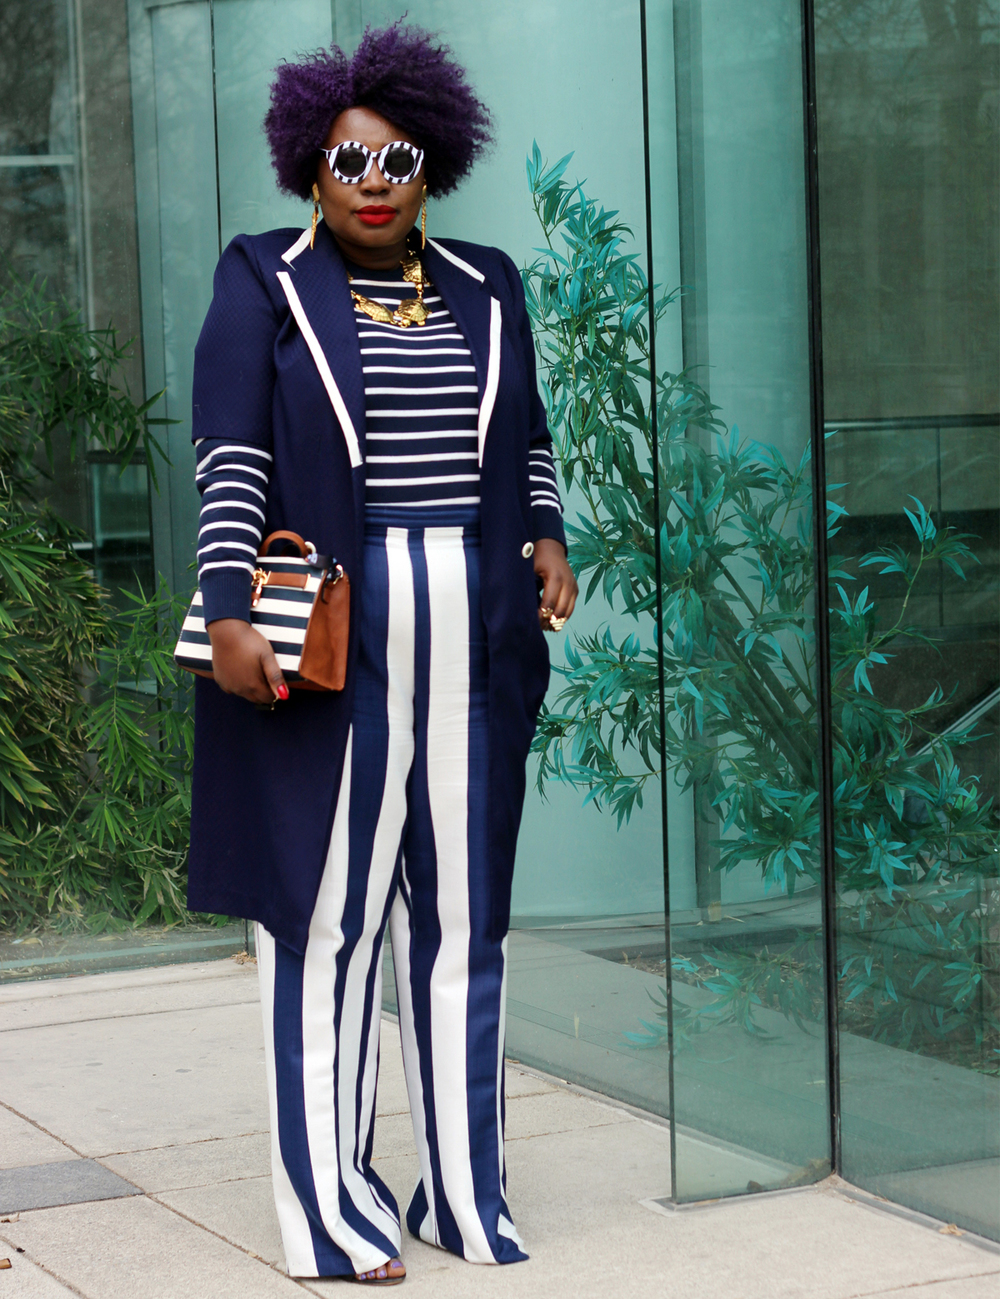 plus-size-style-fashion-week-outfit-stripes-plus-size-stripes-plus-size-street-style-01.jpg